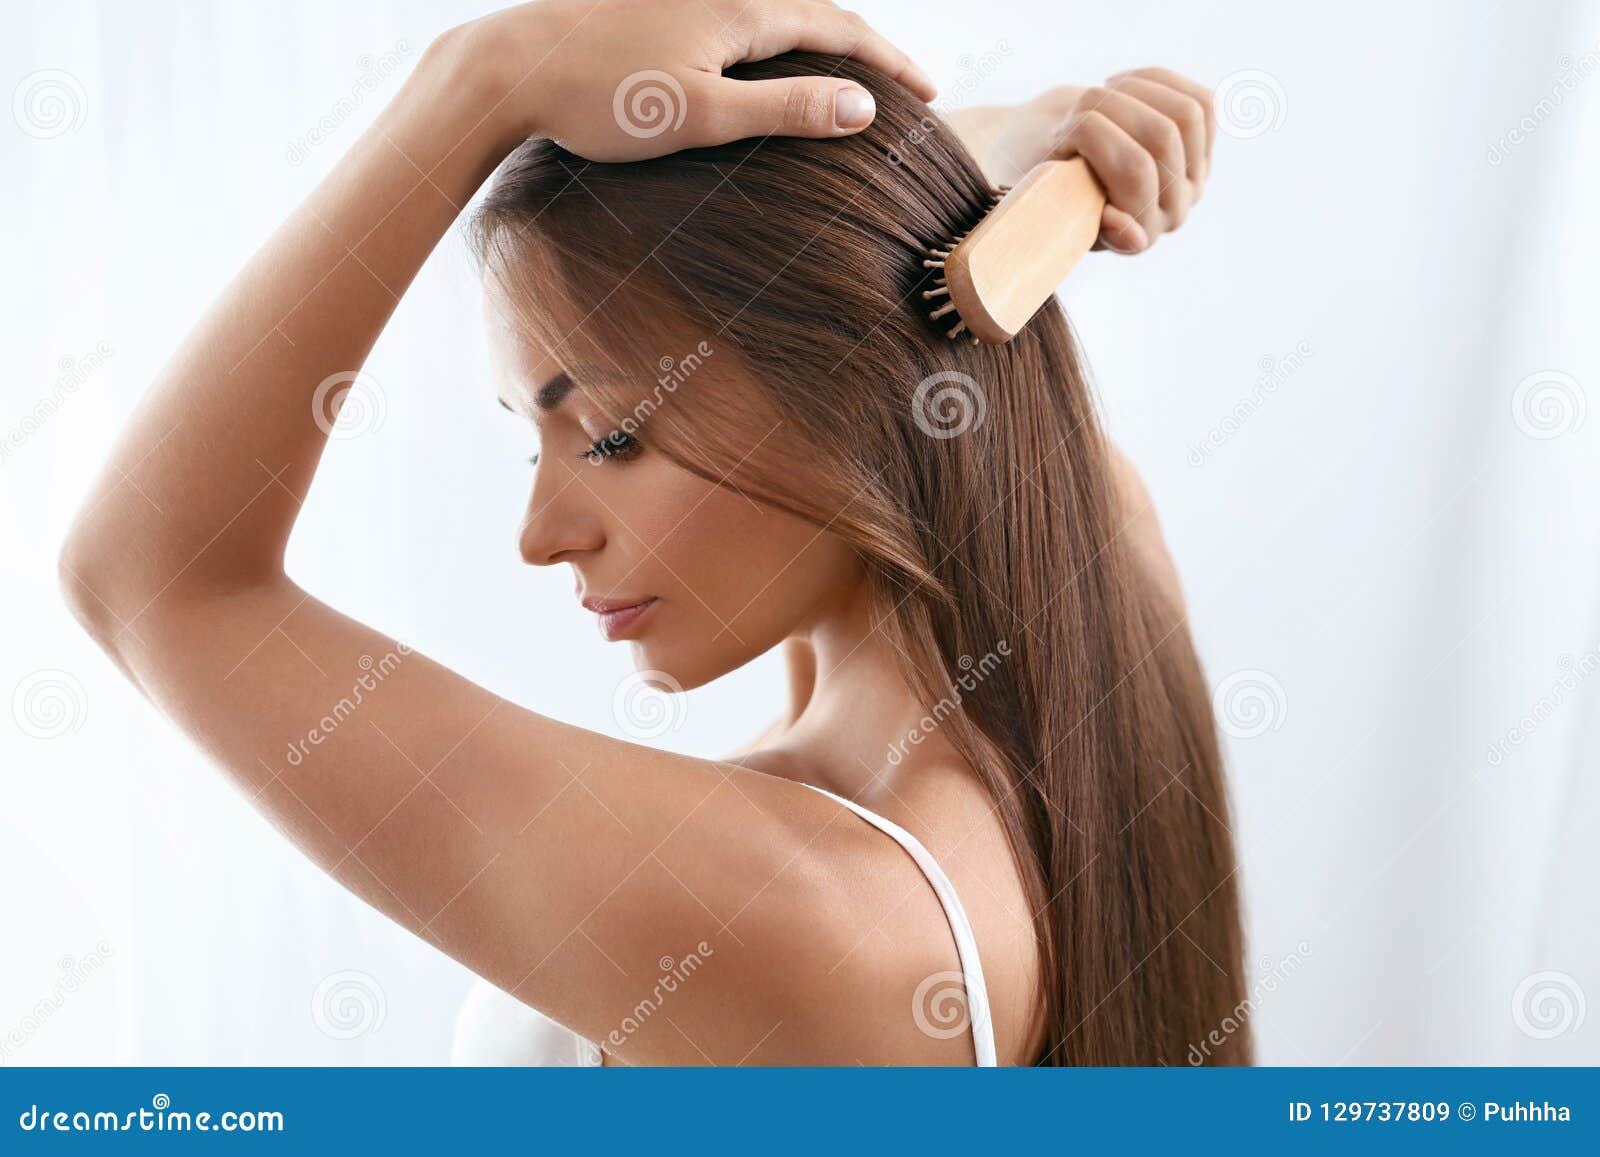 beauty hair care. beautiful woman brushing long healthy hair